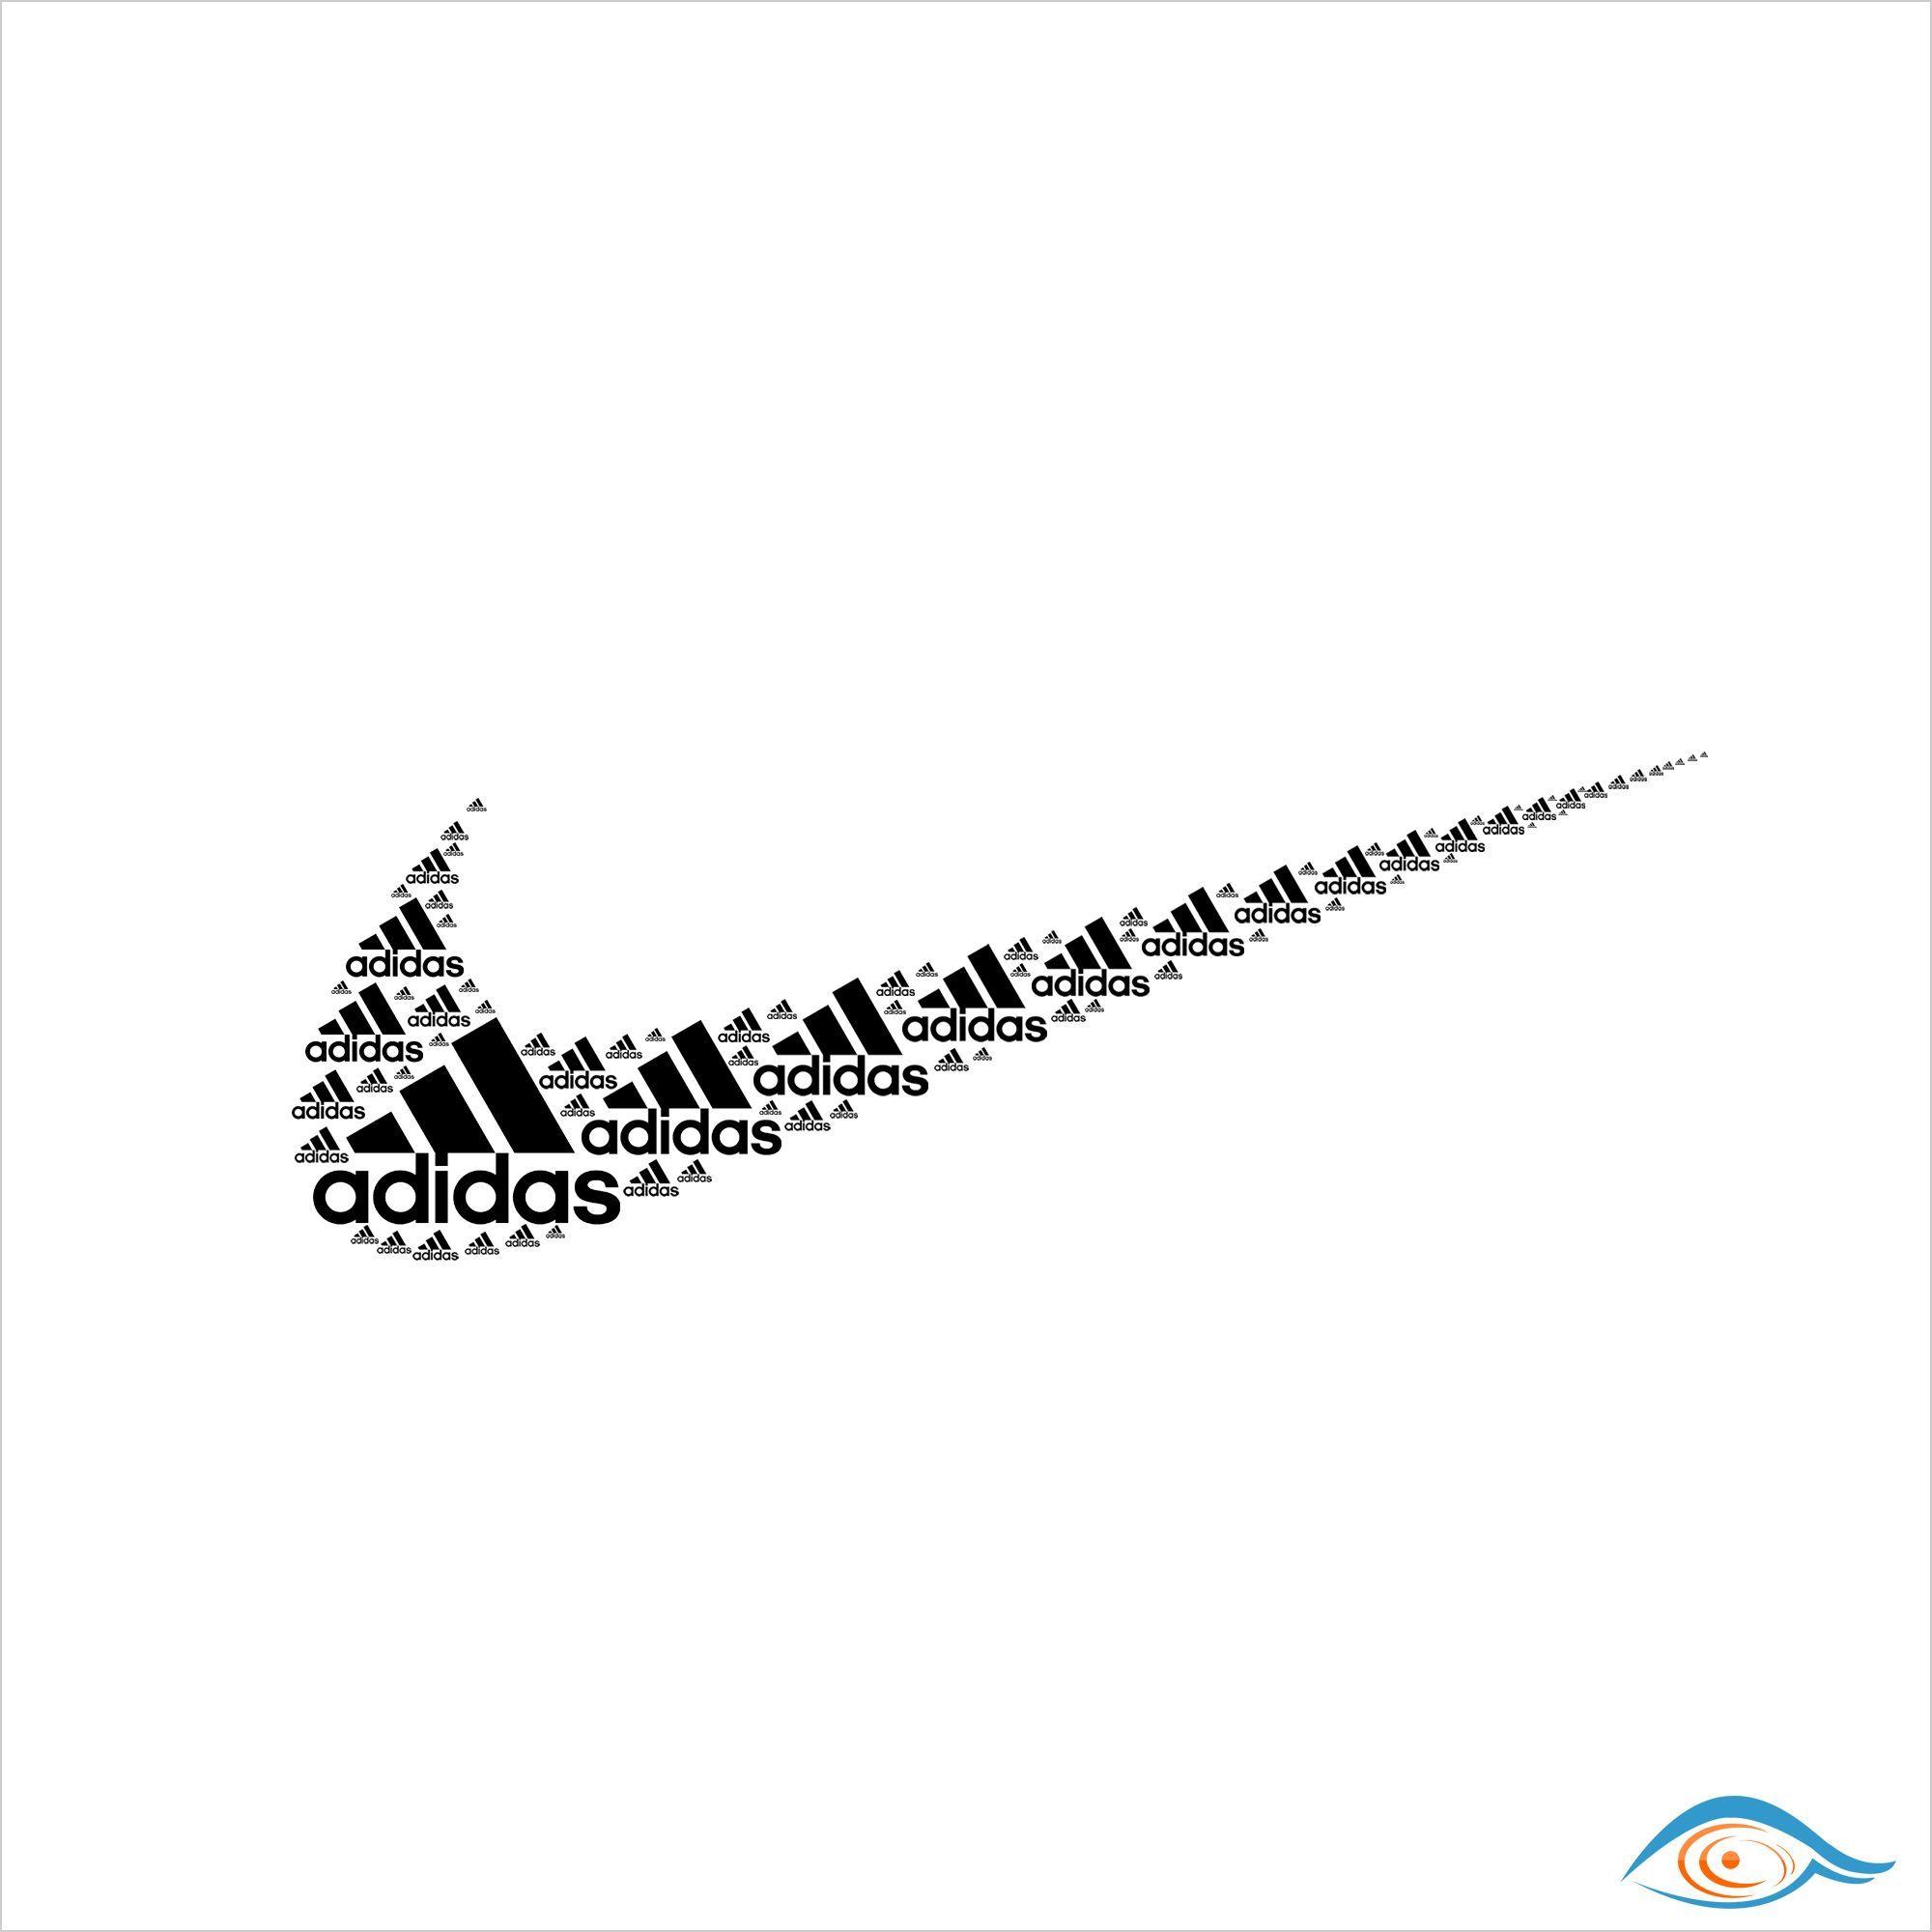 Nike and Adidas Logo - Nike Logo designed with many #adidas logos | C R Y S T A L | Adidas ...